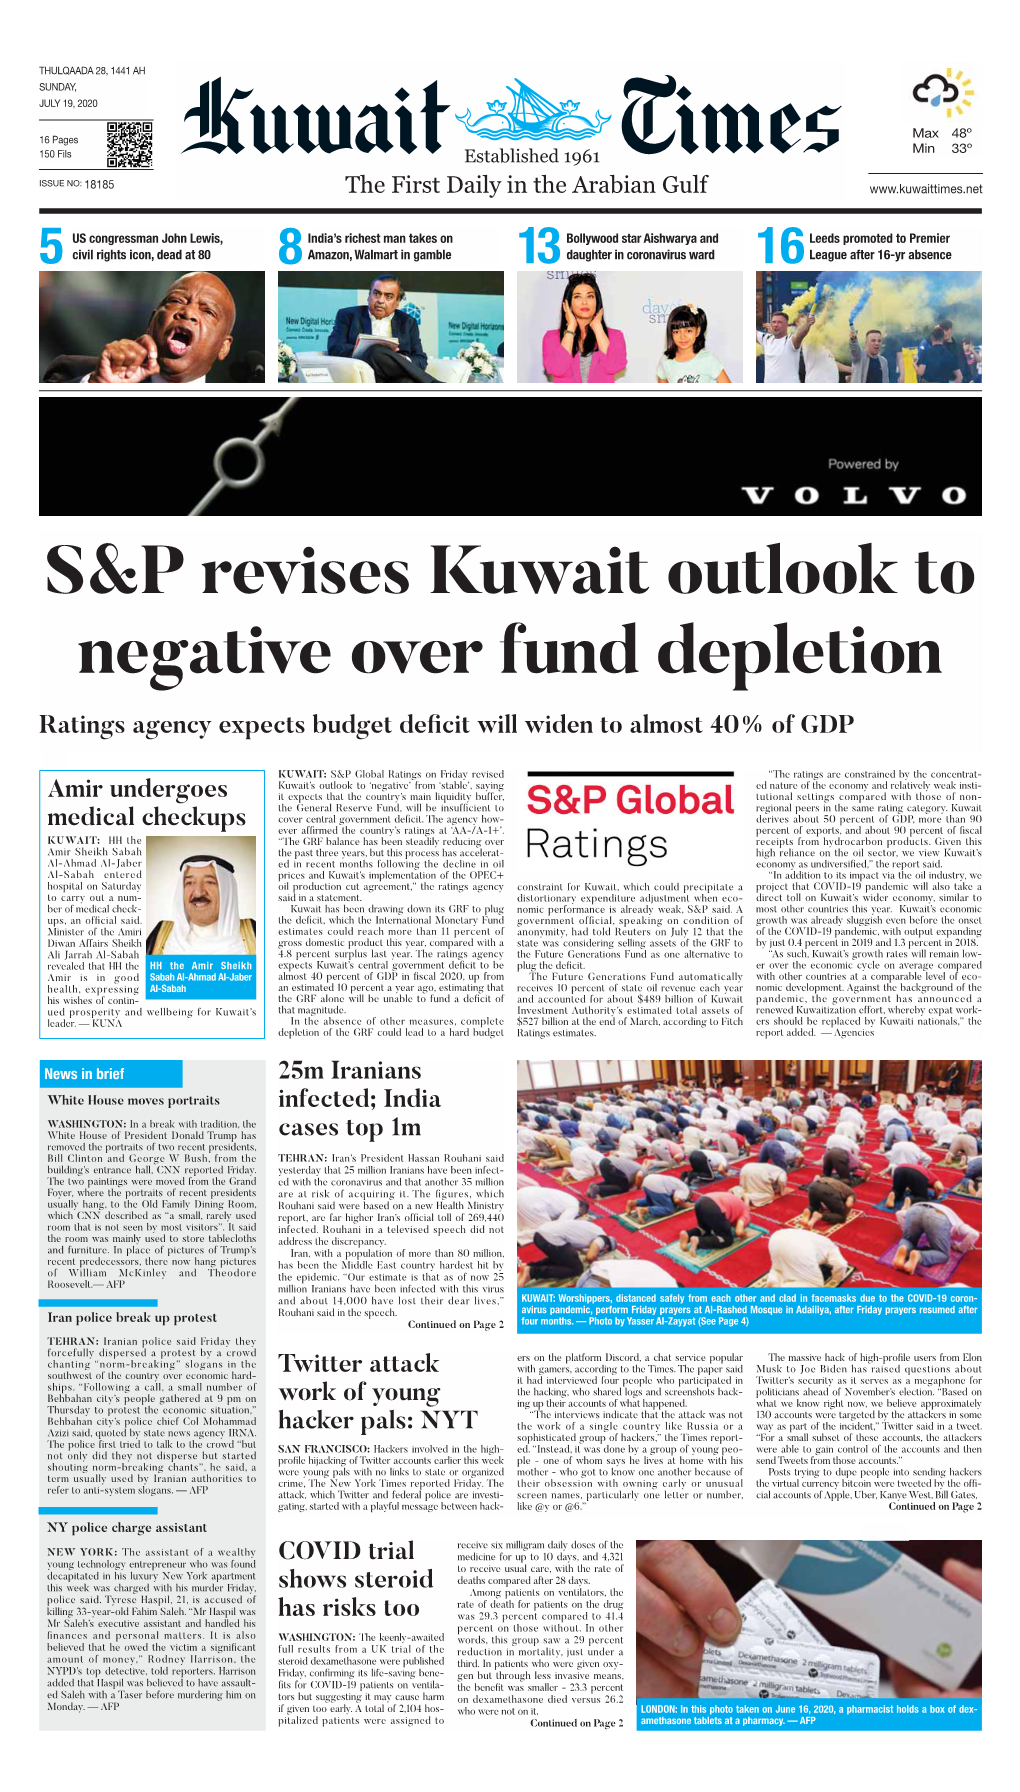 S&P Revises Kuwait Outlook to Negative Over Fund Depletion